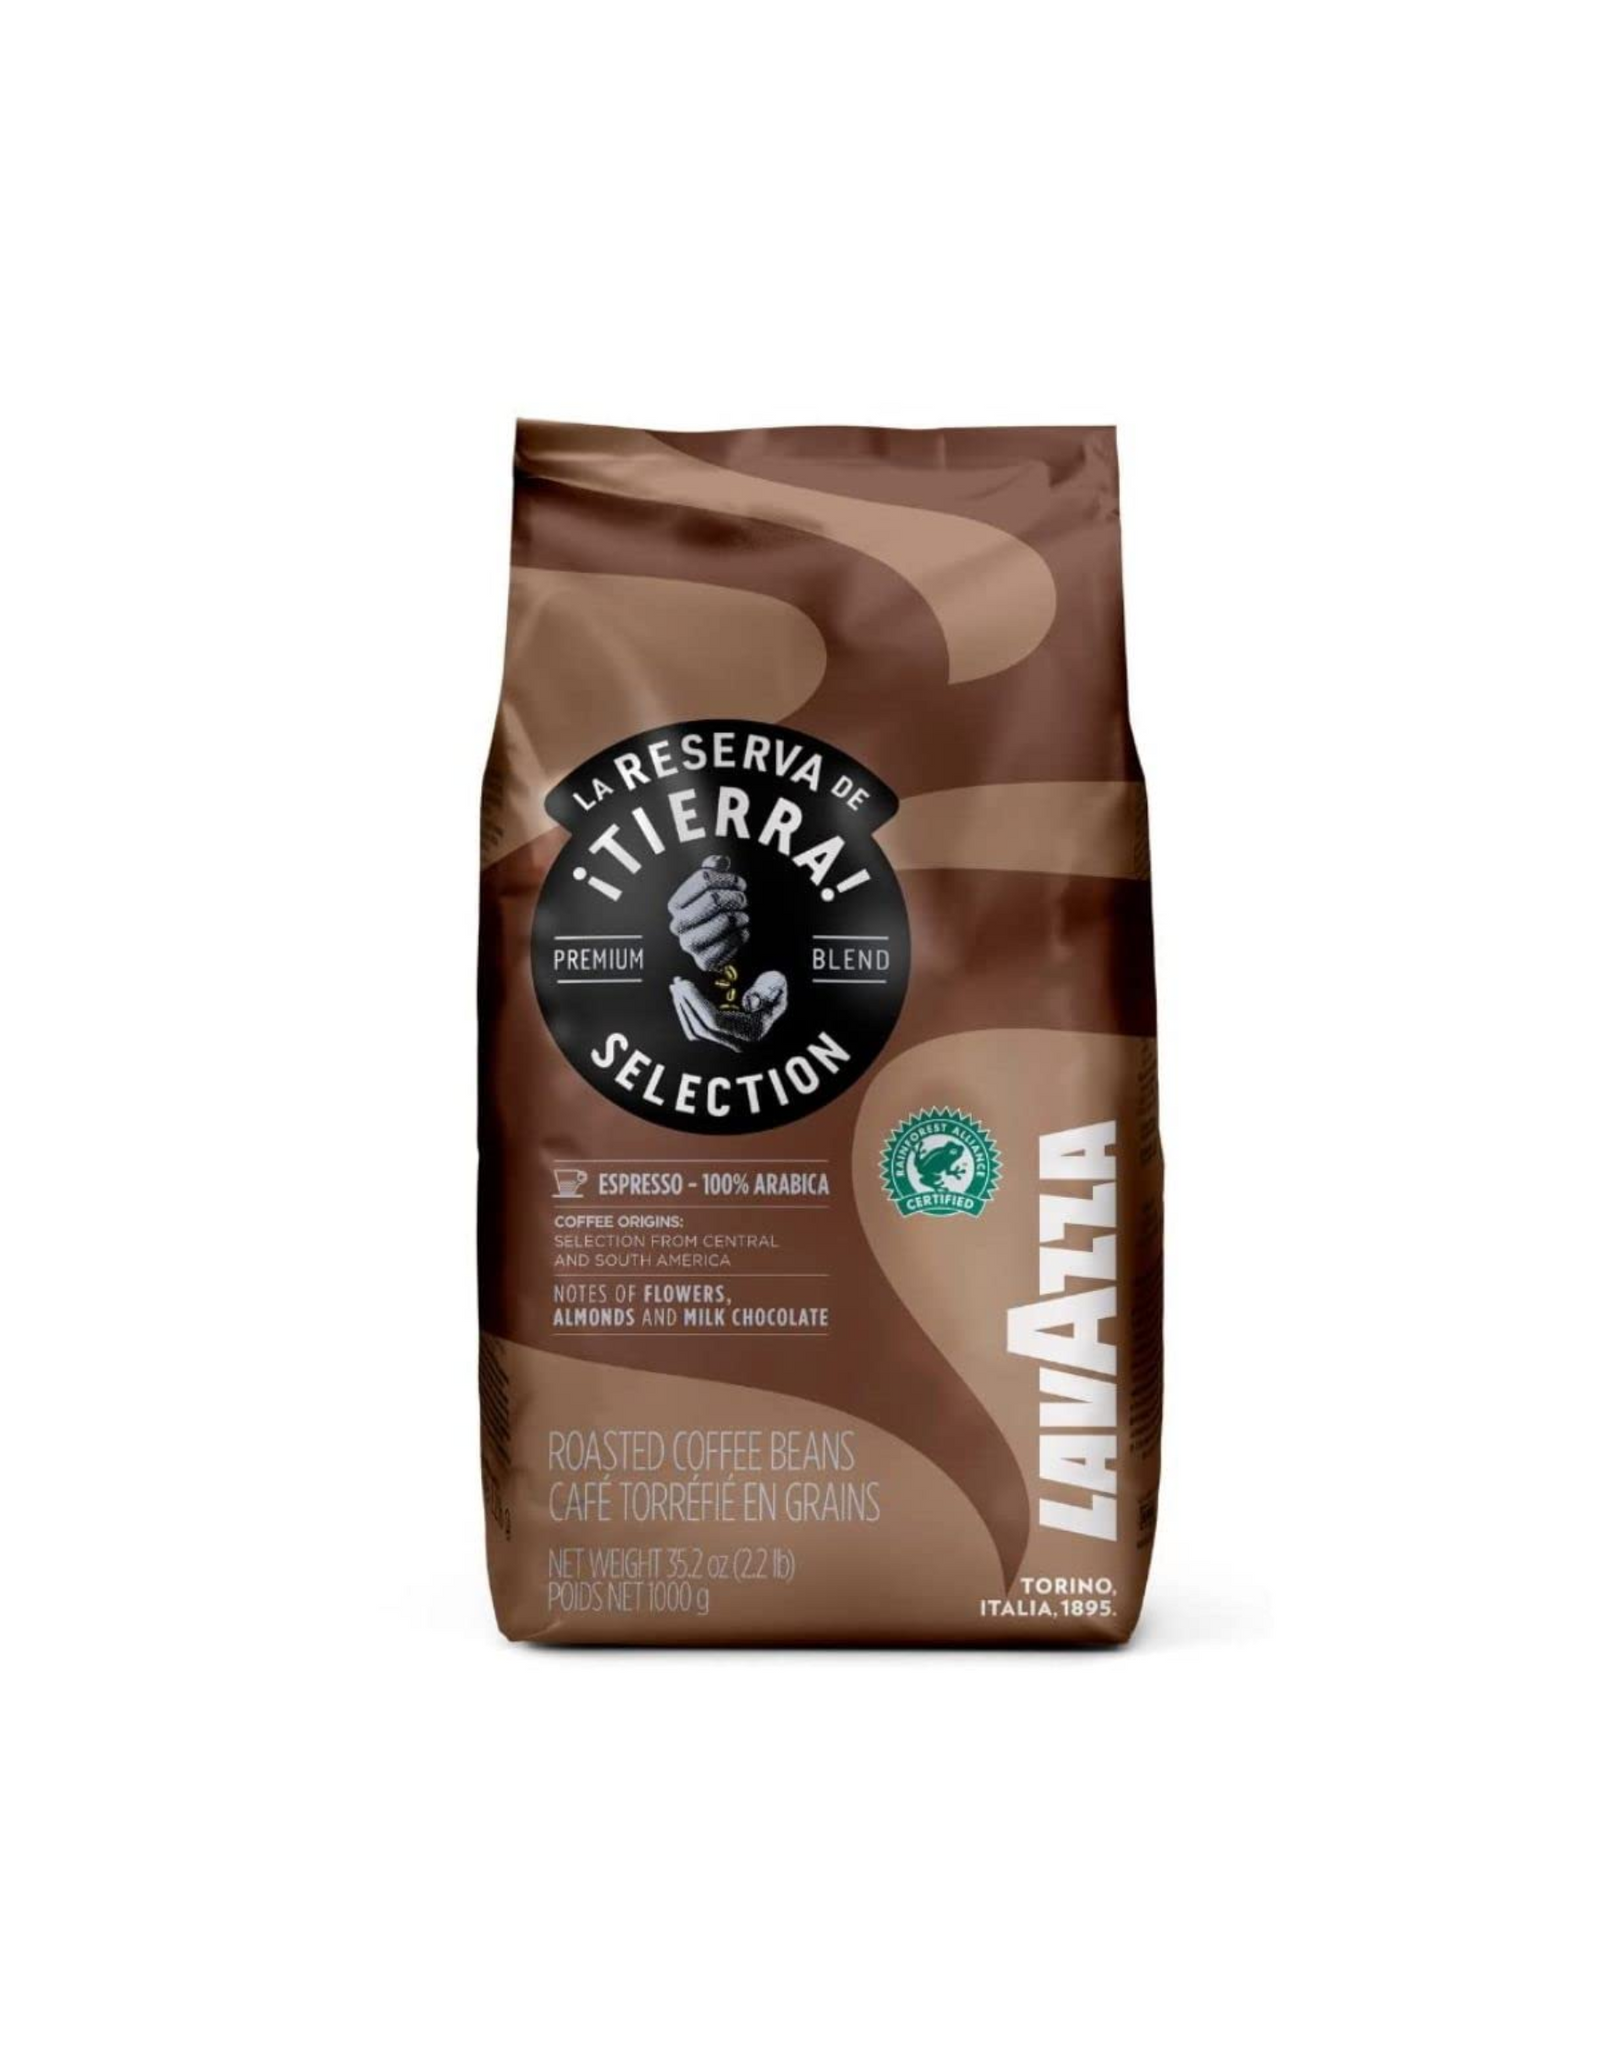 Lavazza Tierra! Selection Whole Bean Coffee Blend, 100% Arabica, Medium Roast, 35.2 oz (2.2 lb)